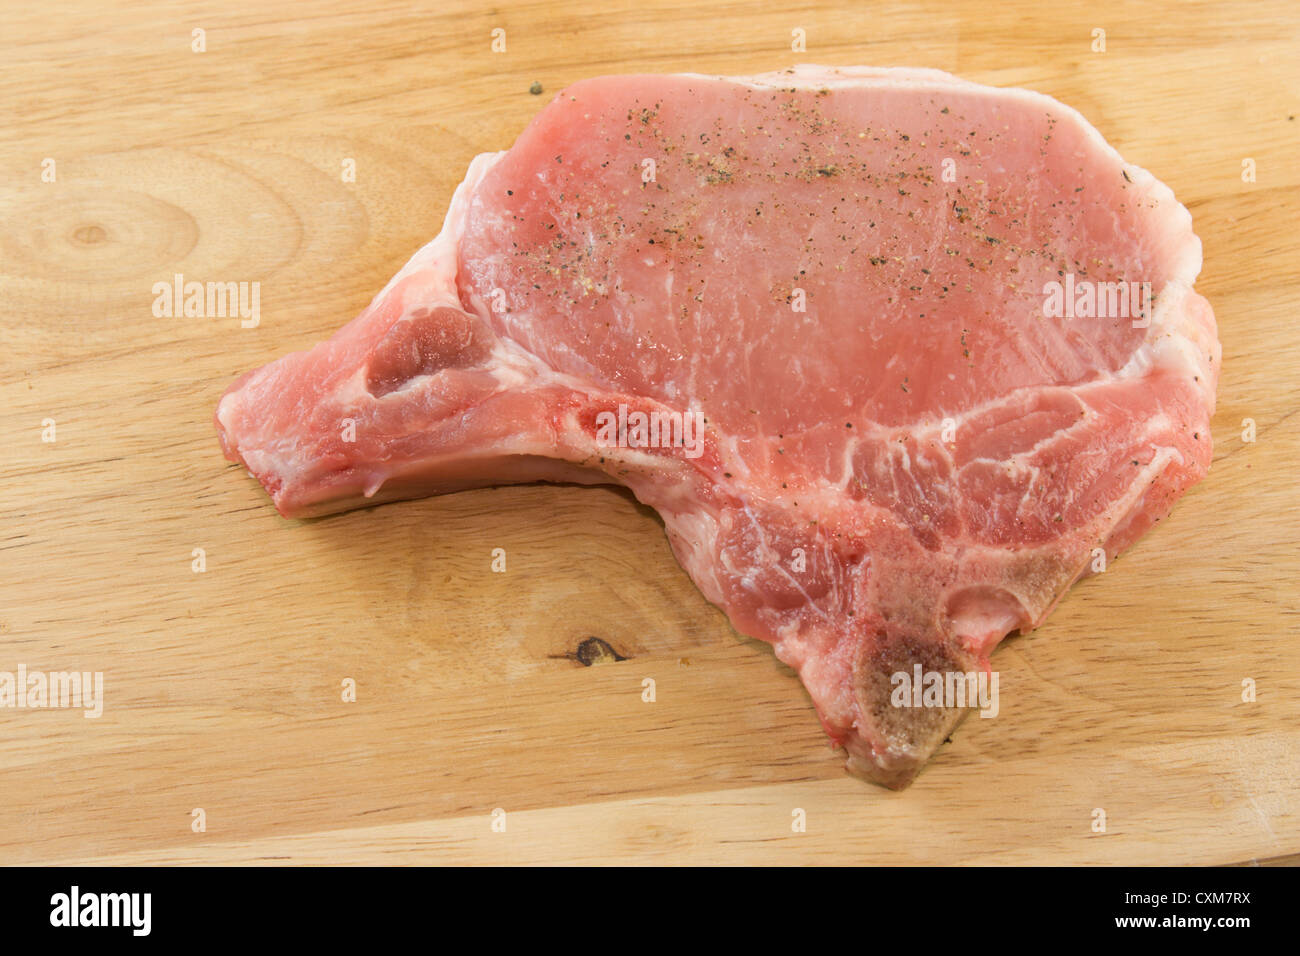 fresh, pork chop seasoned with salt and pepper on woodgrain cutting board ready to cook Stock Photo